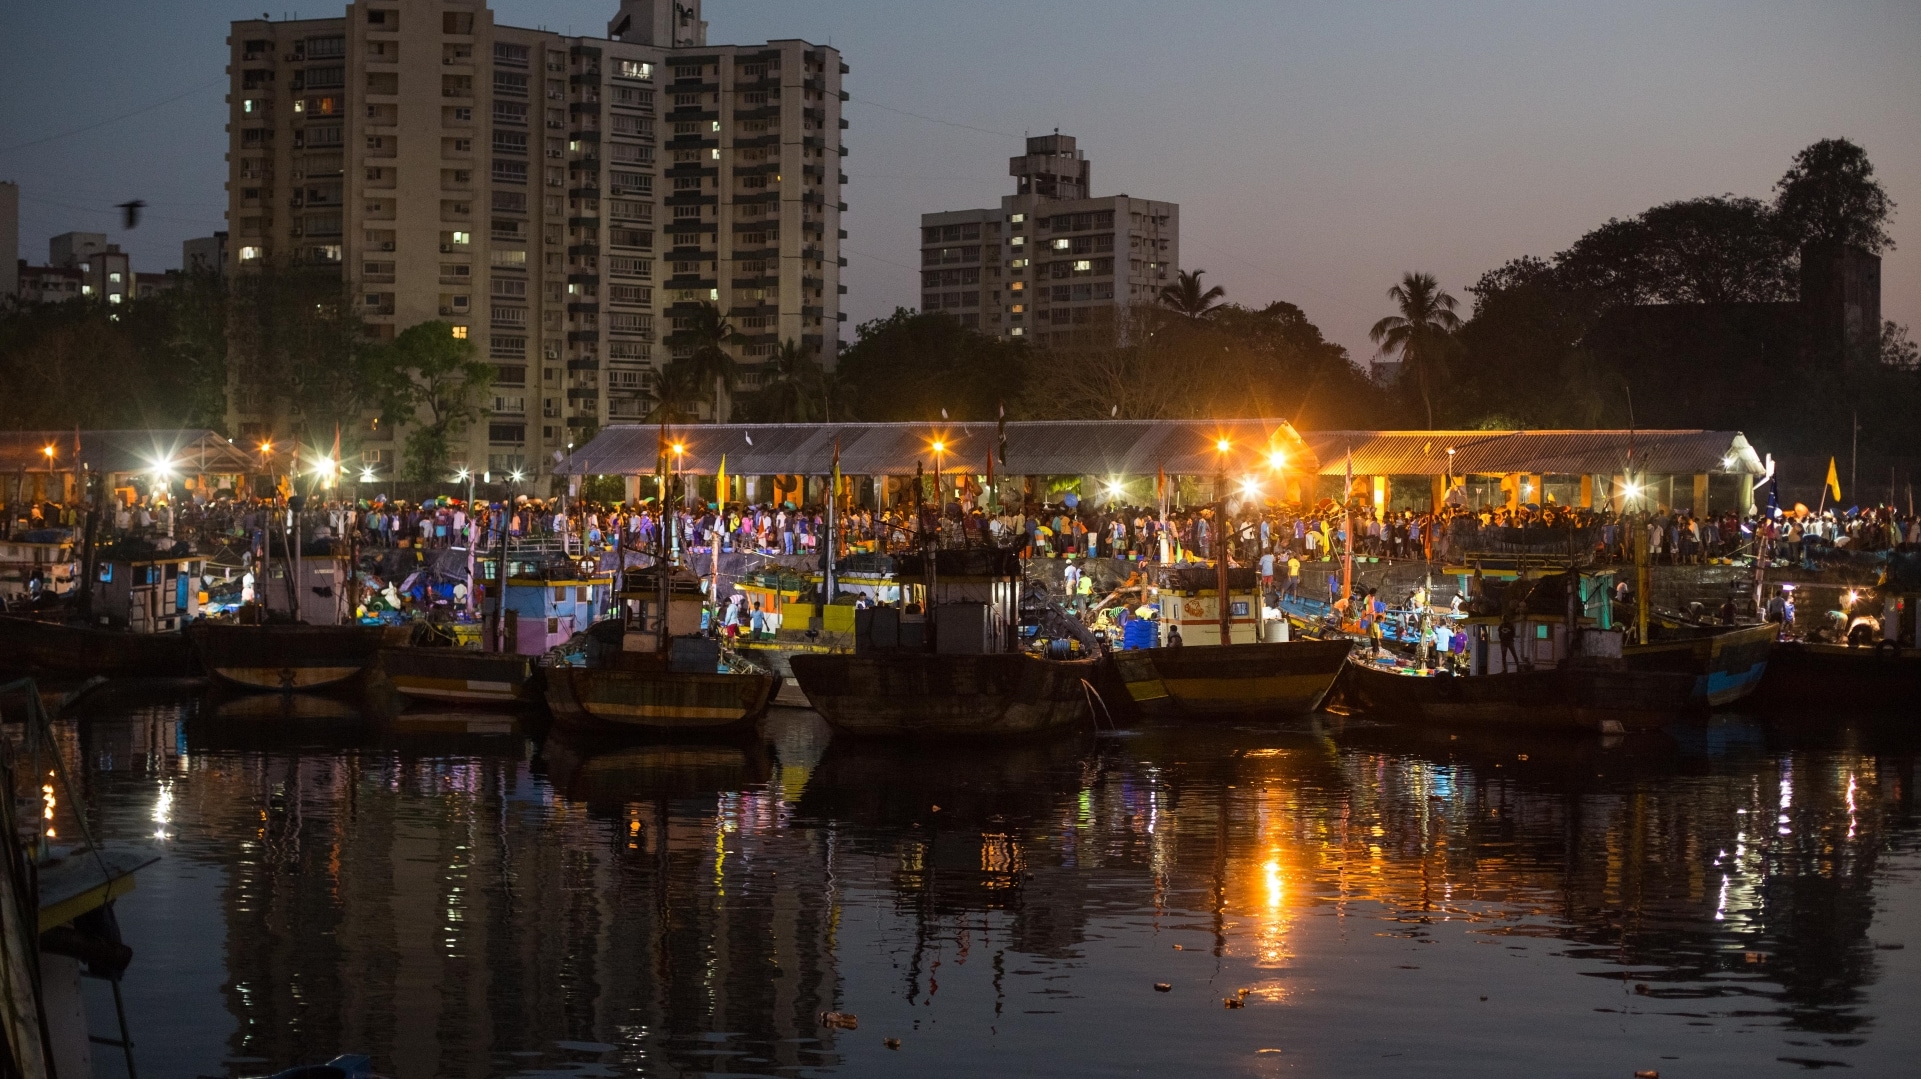 The Kolis, one of the oldest fishing communities of Mumbai, face an uncertain future